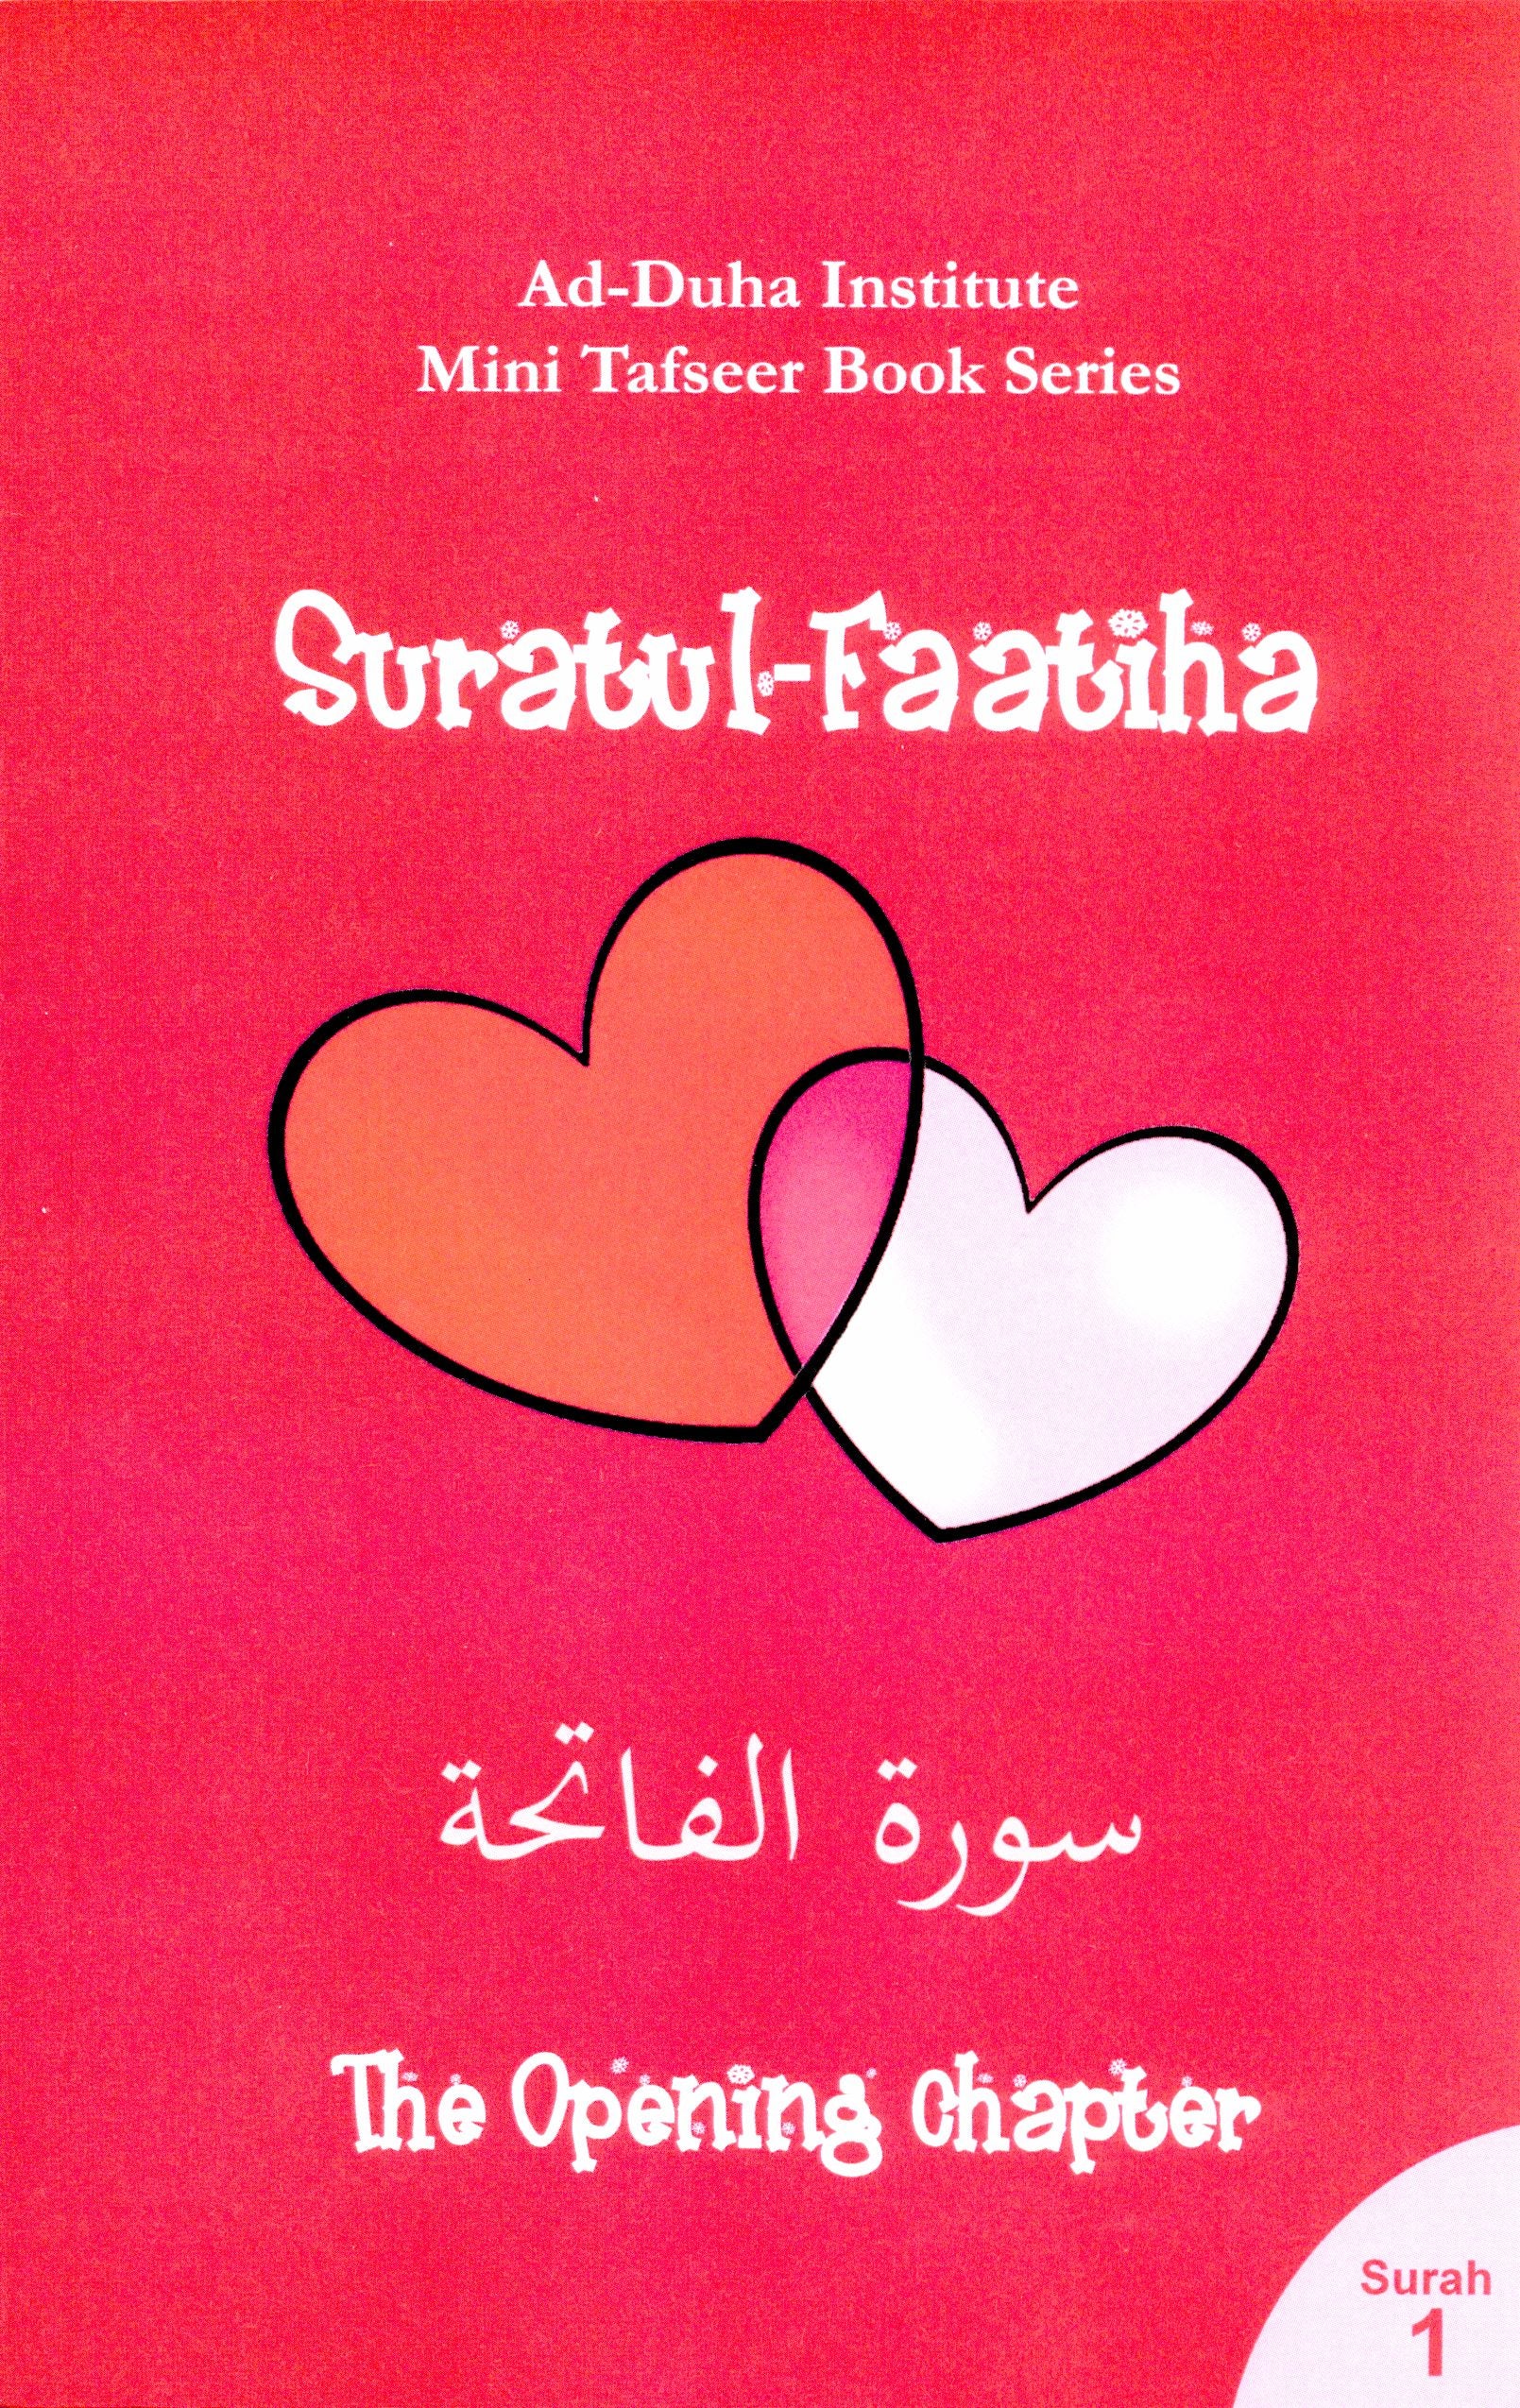 Mini Tafseer Book Suratul Faatiha (Surah 1)